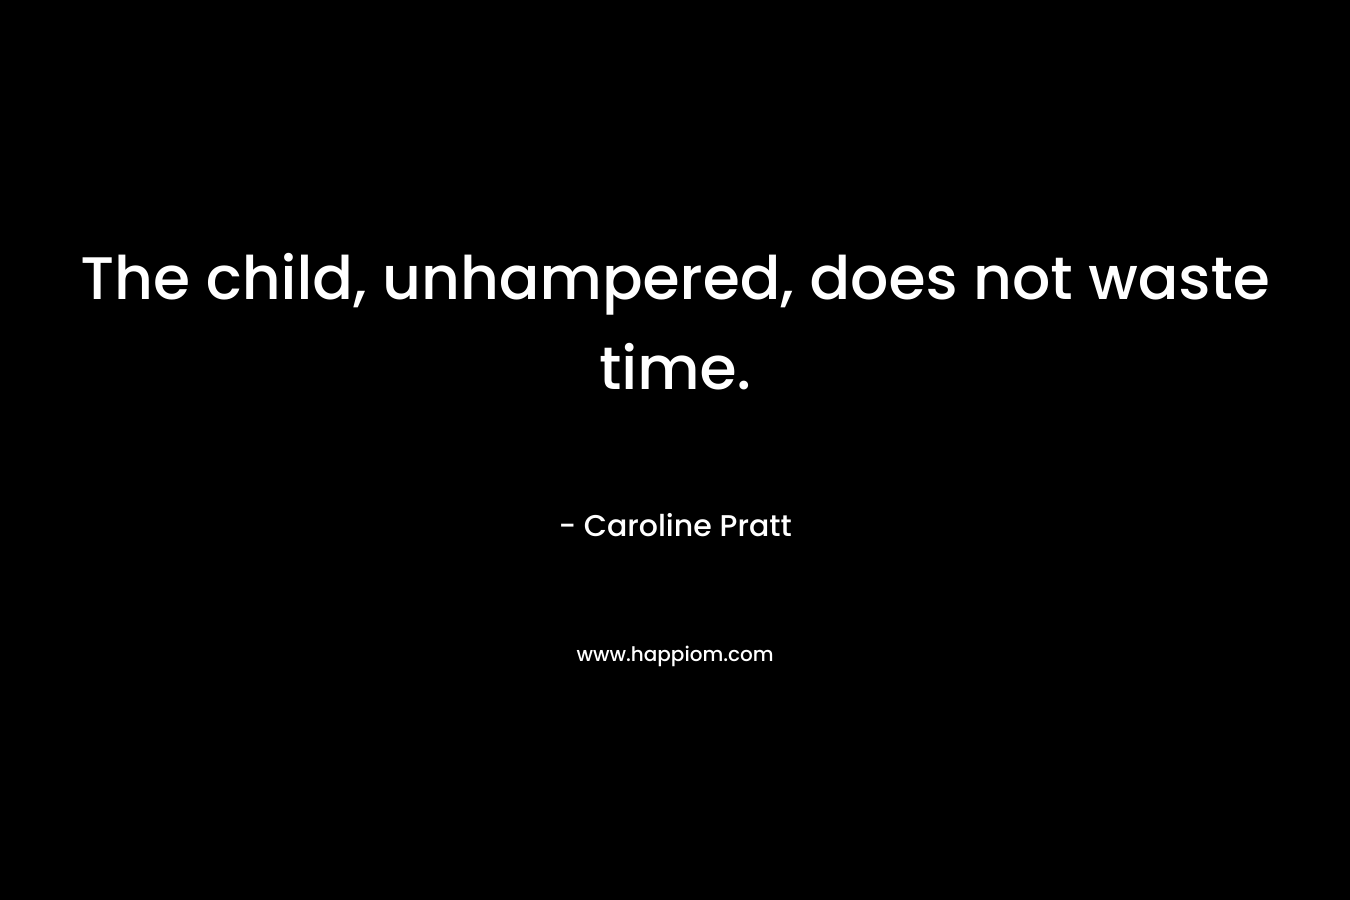 The child, unhampered, does not waste time. – Caroline Pratt